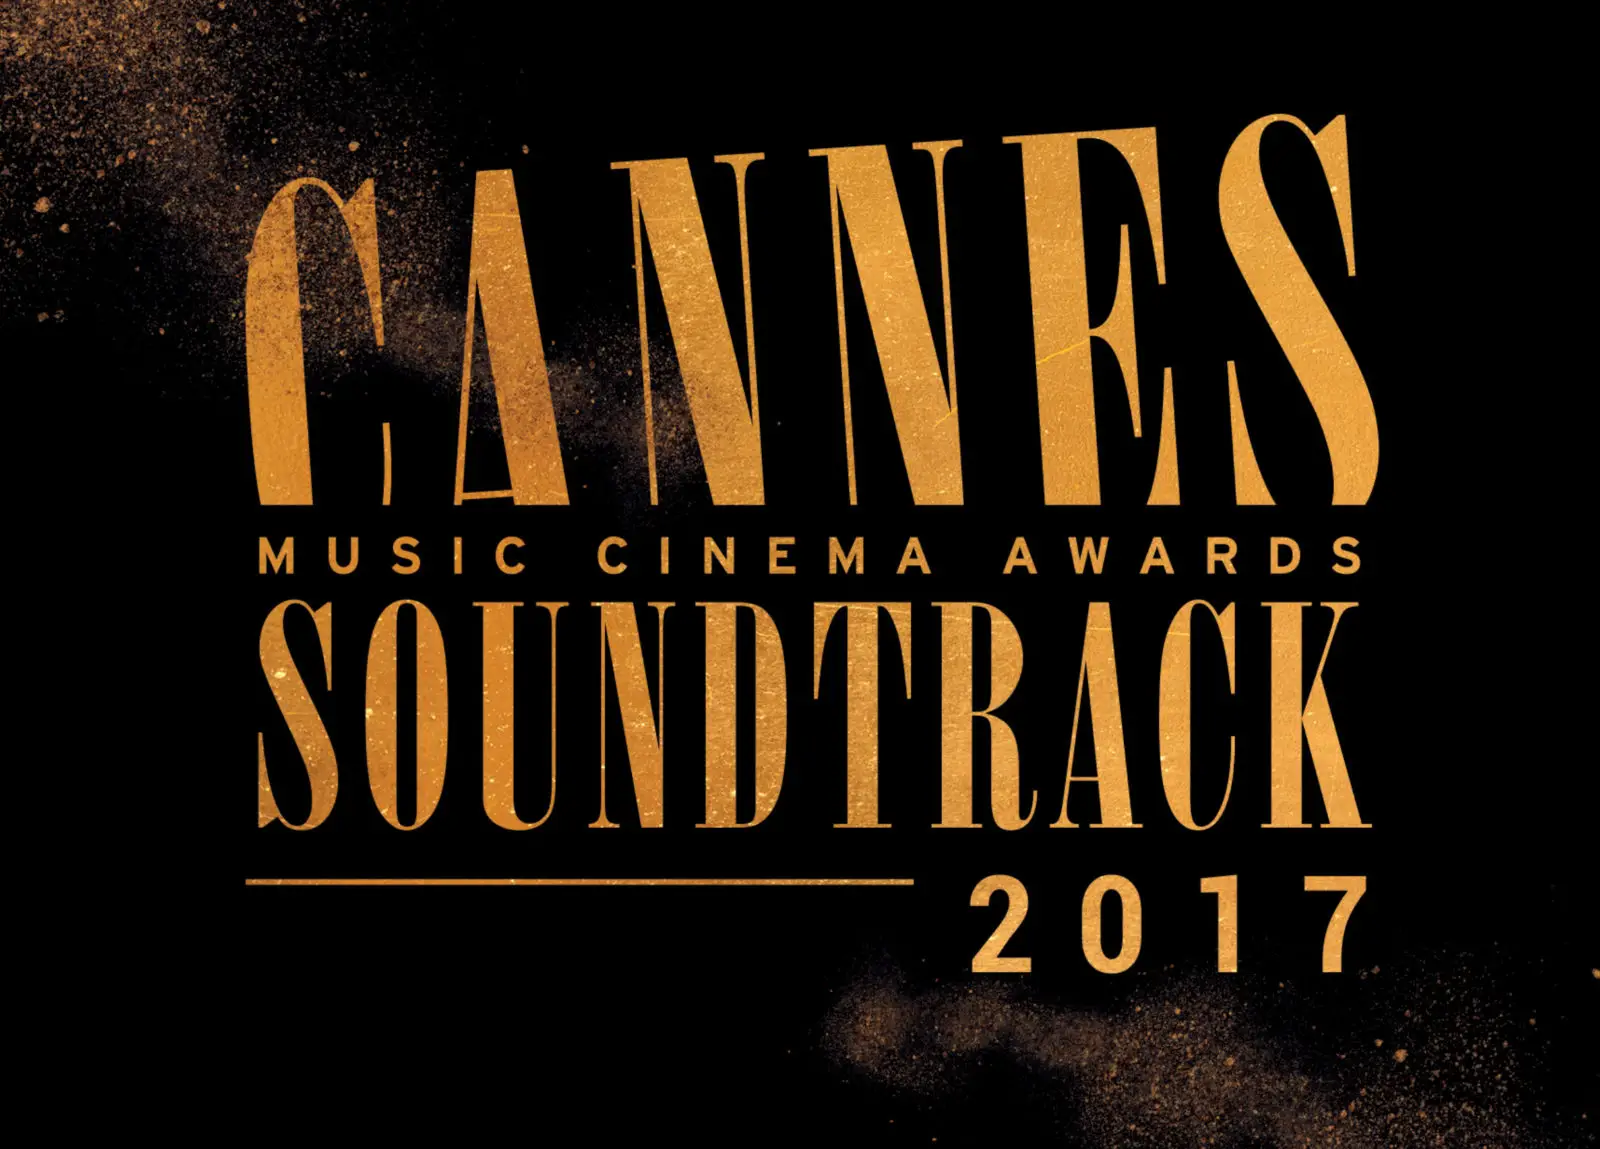 Cannes Soundtrack